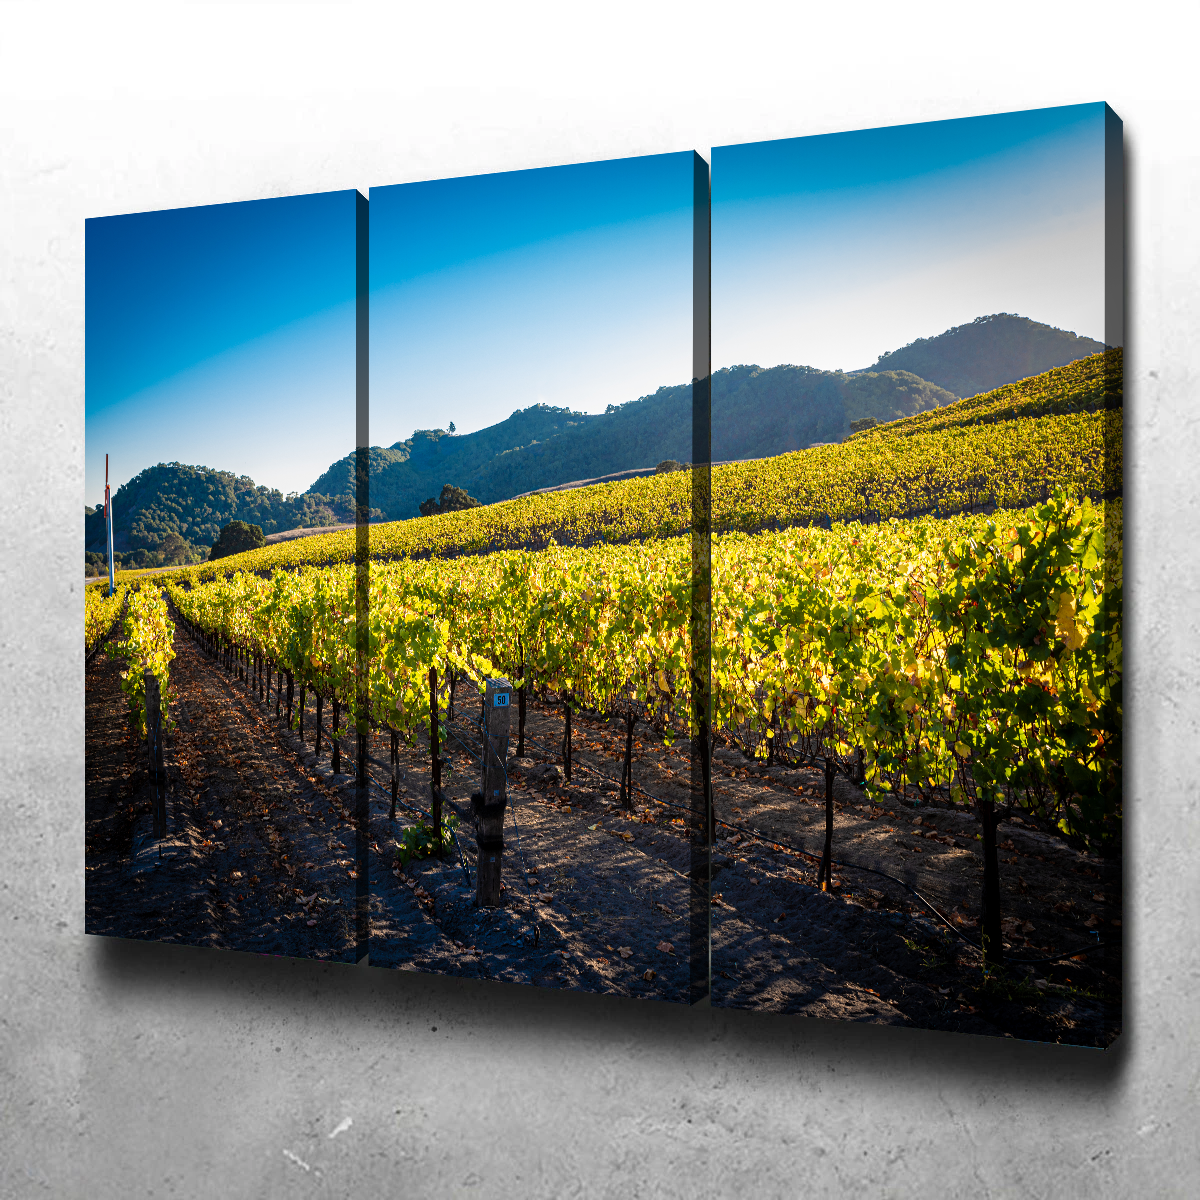 Central California Vineyard